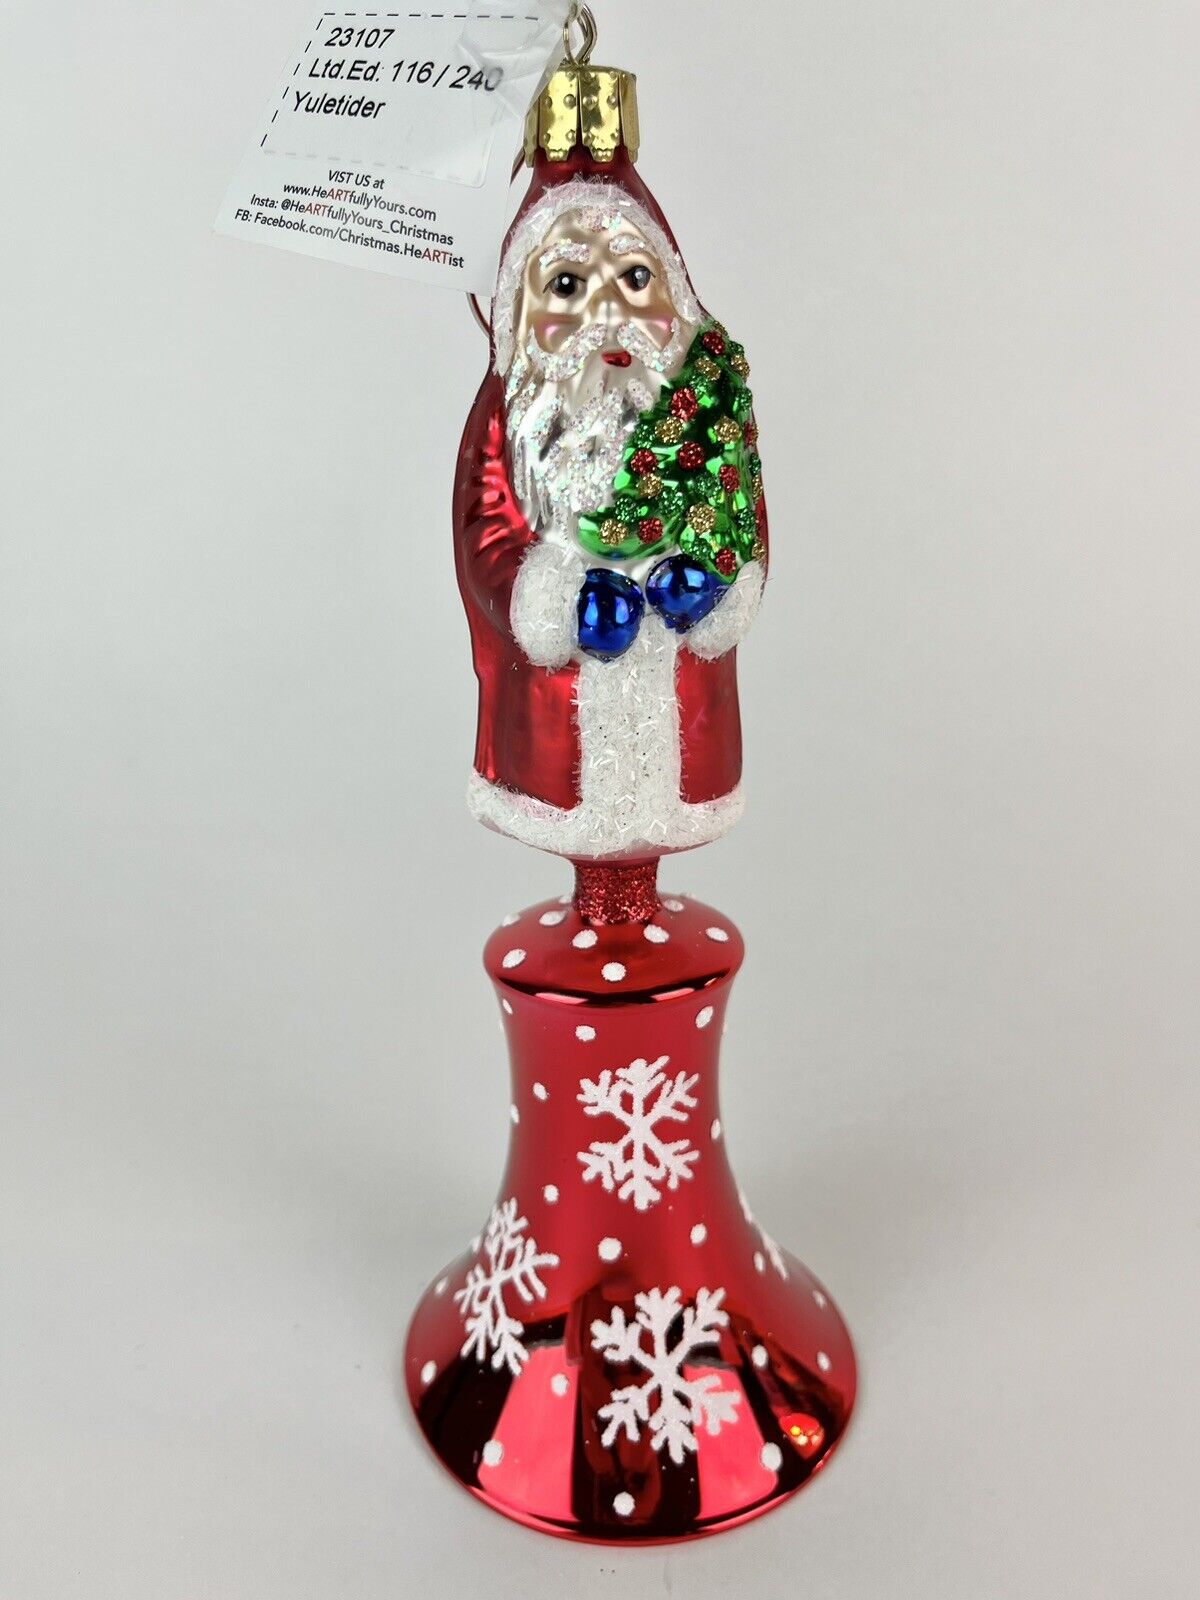 Heartfully Yours Radko YULETIDER 23107 Santa Bell Glass Ornament 116/240 Limited